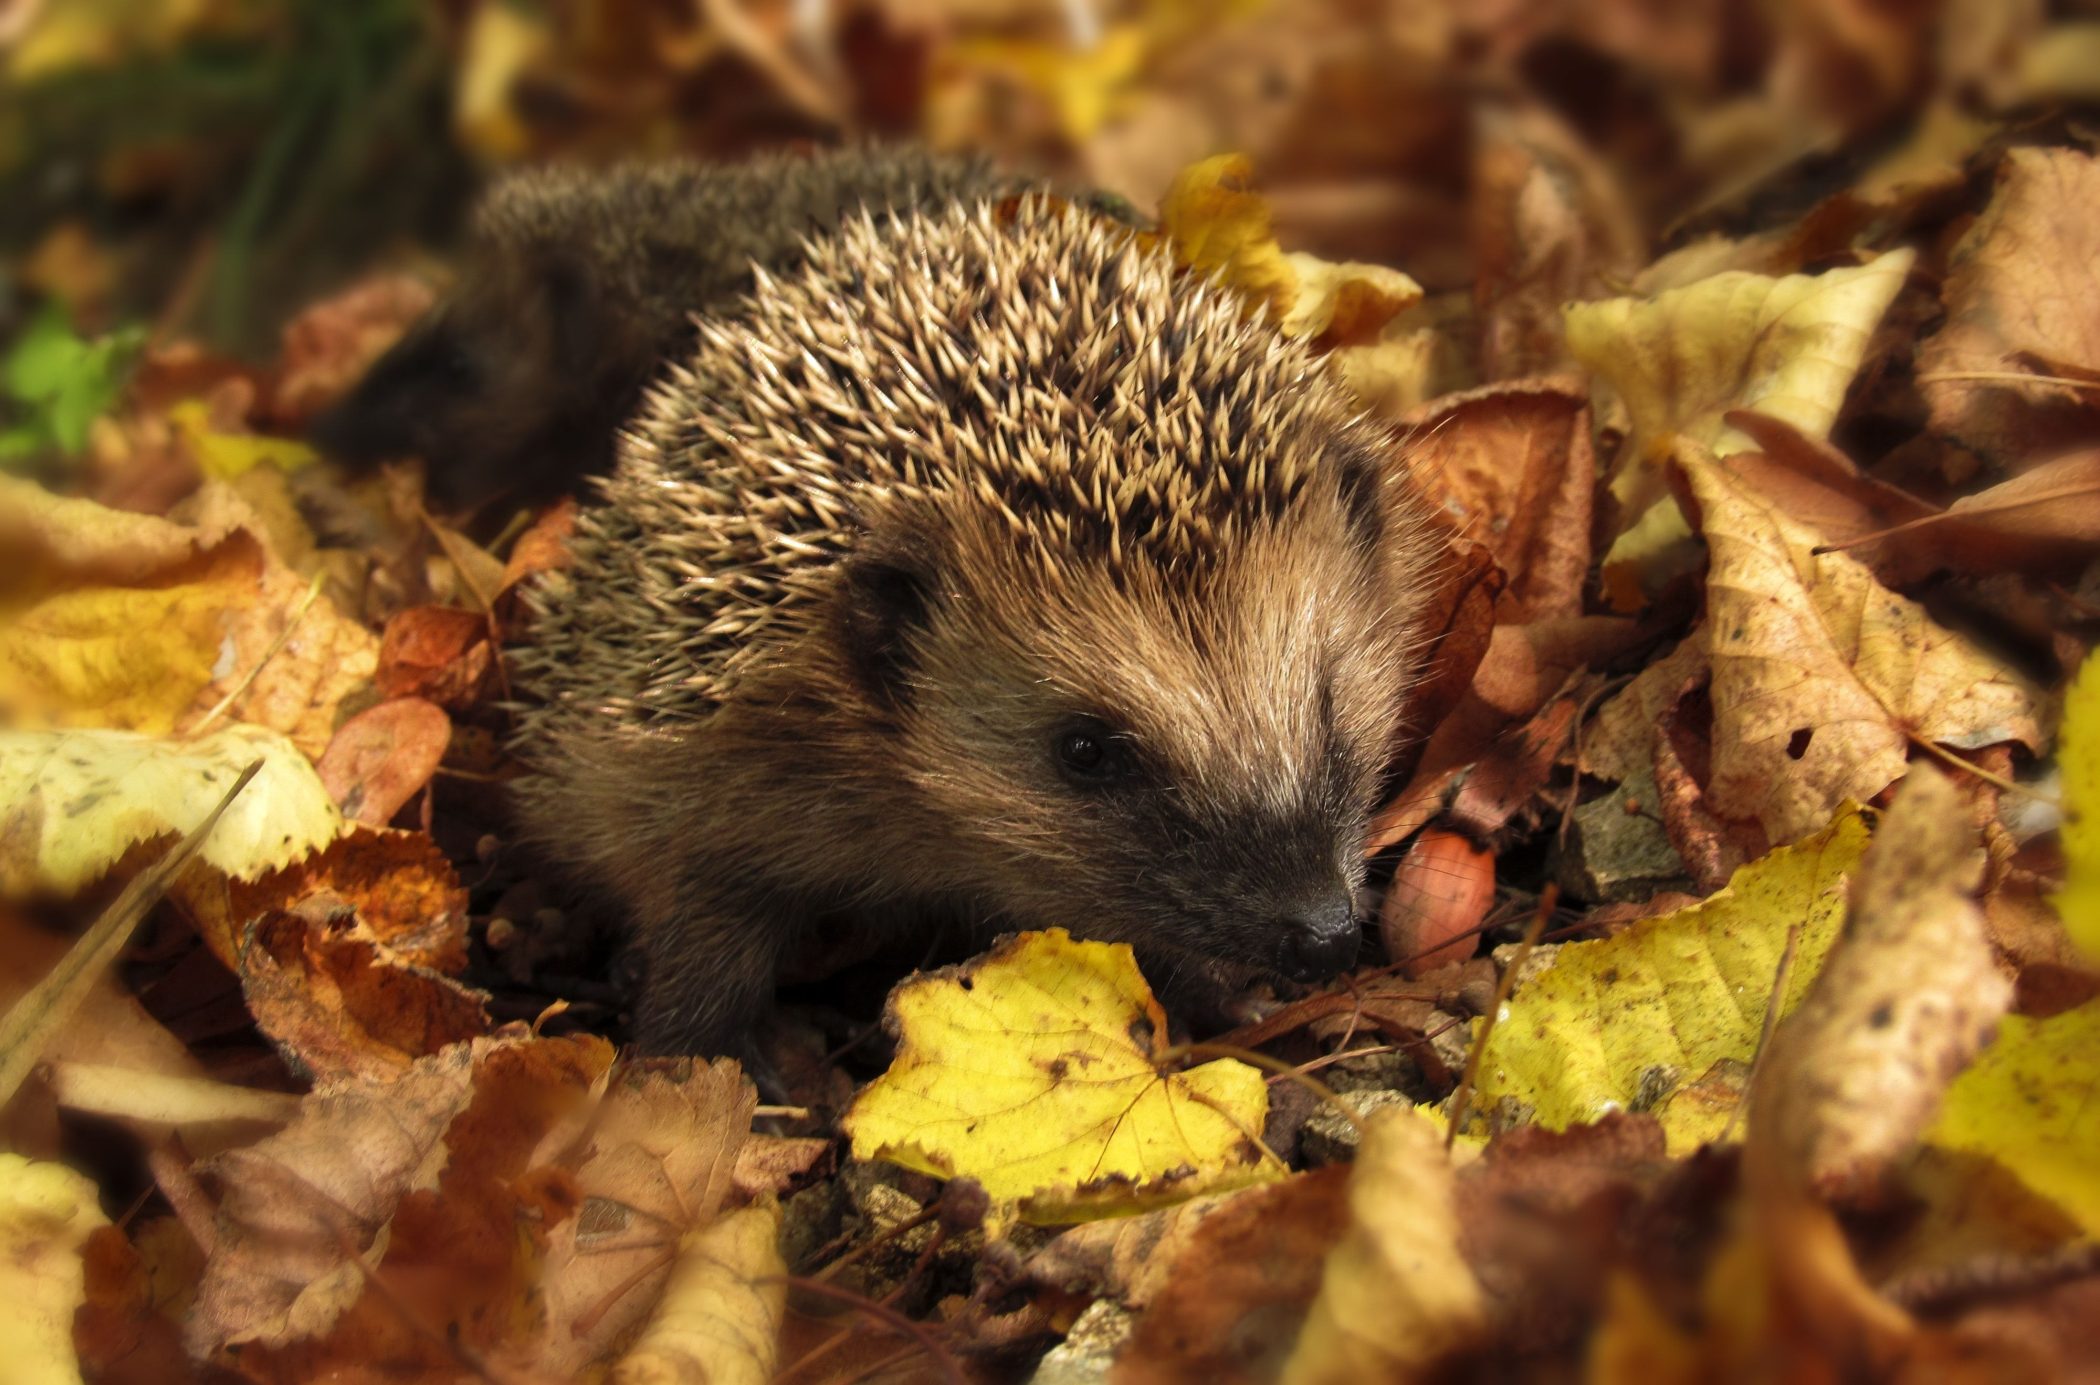 A hedgehog nestling in a pile of leaves